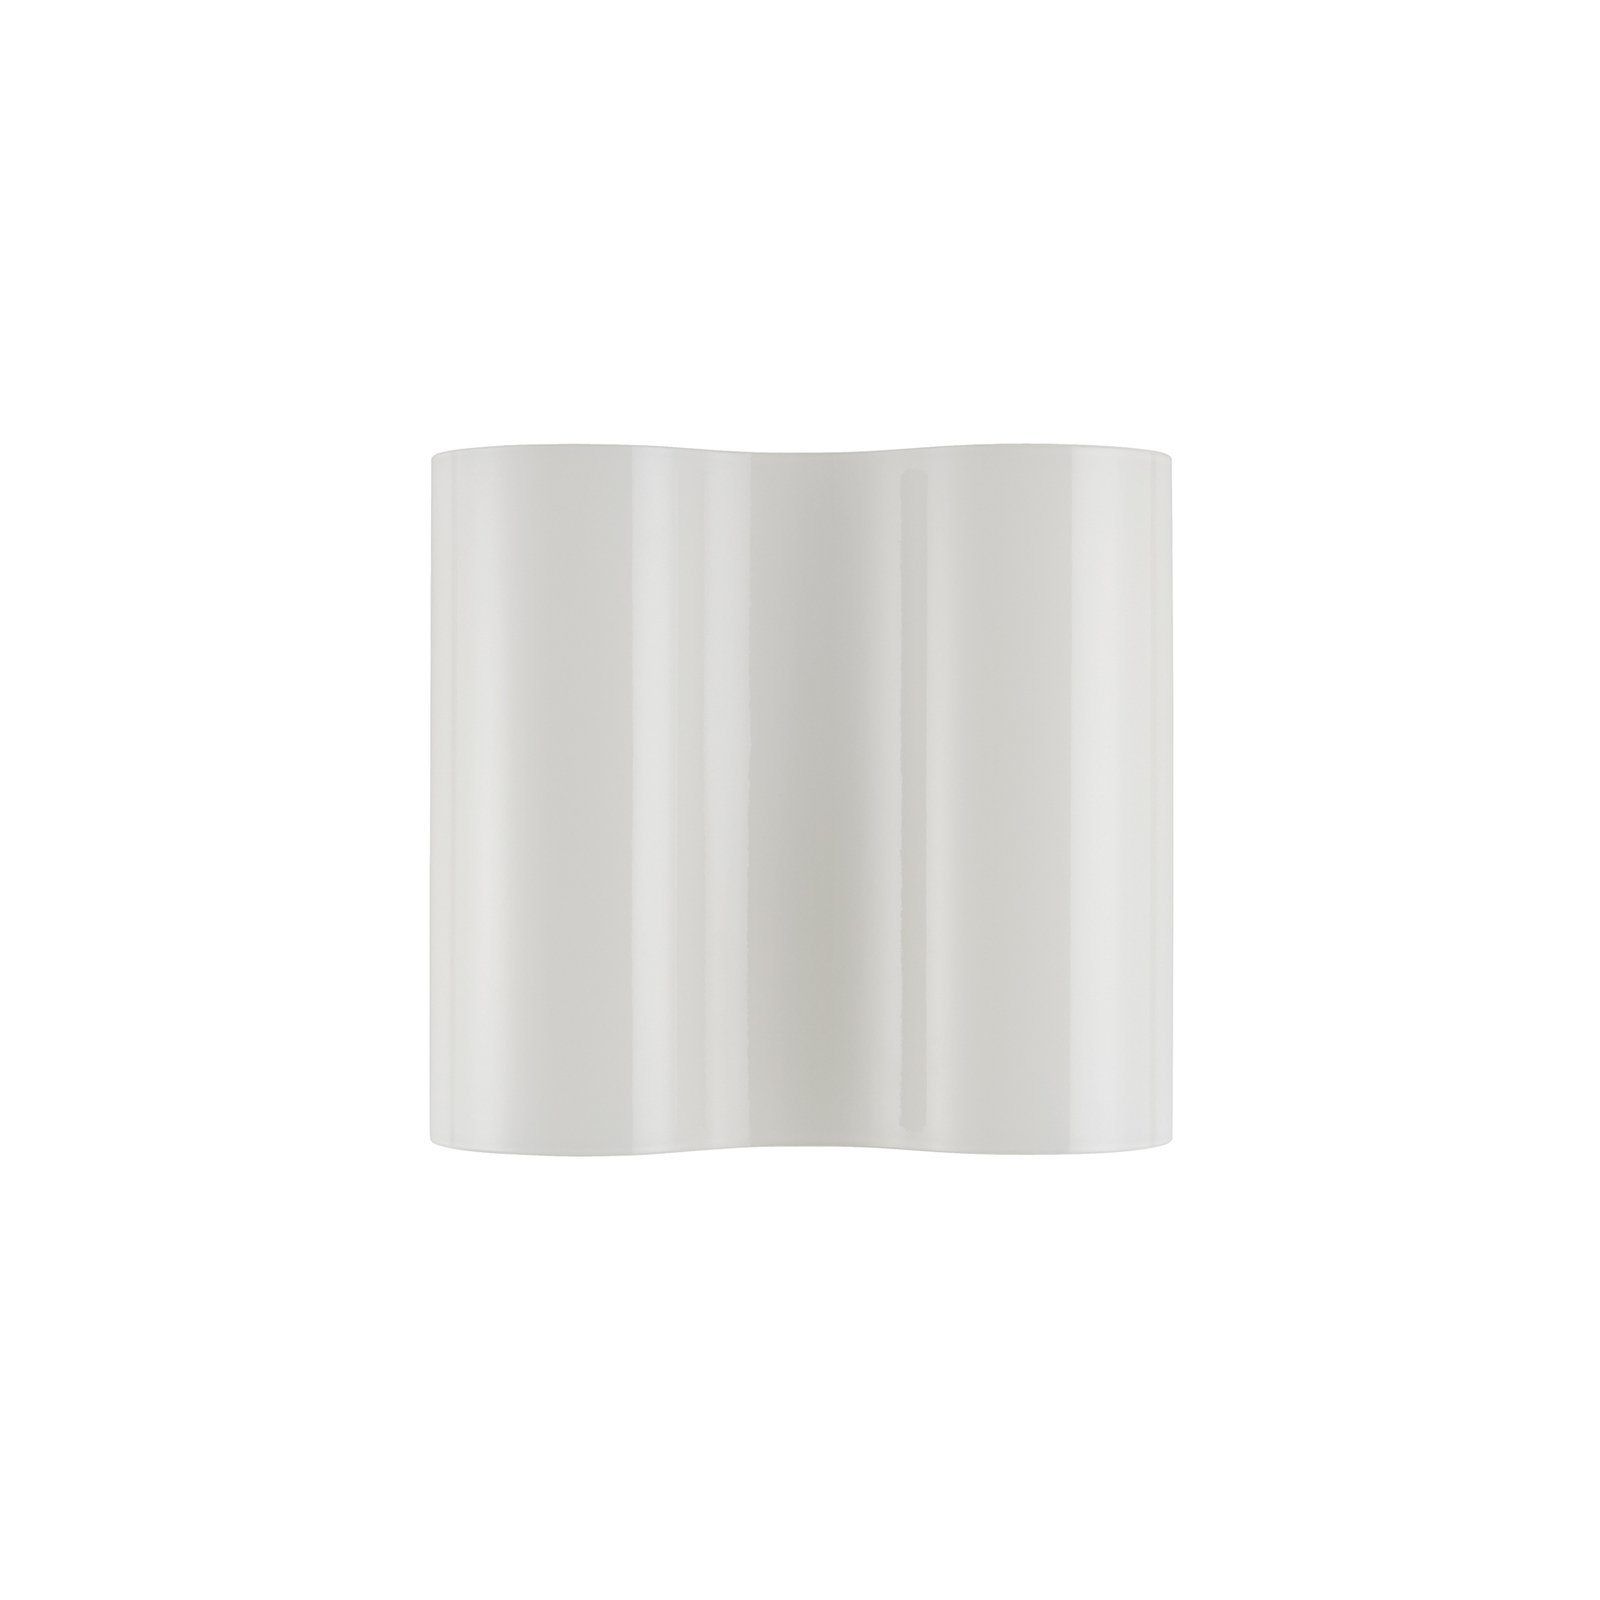 Foscarini Double glass wall light, white